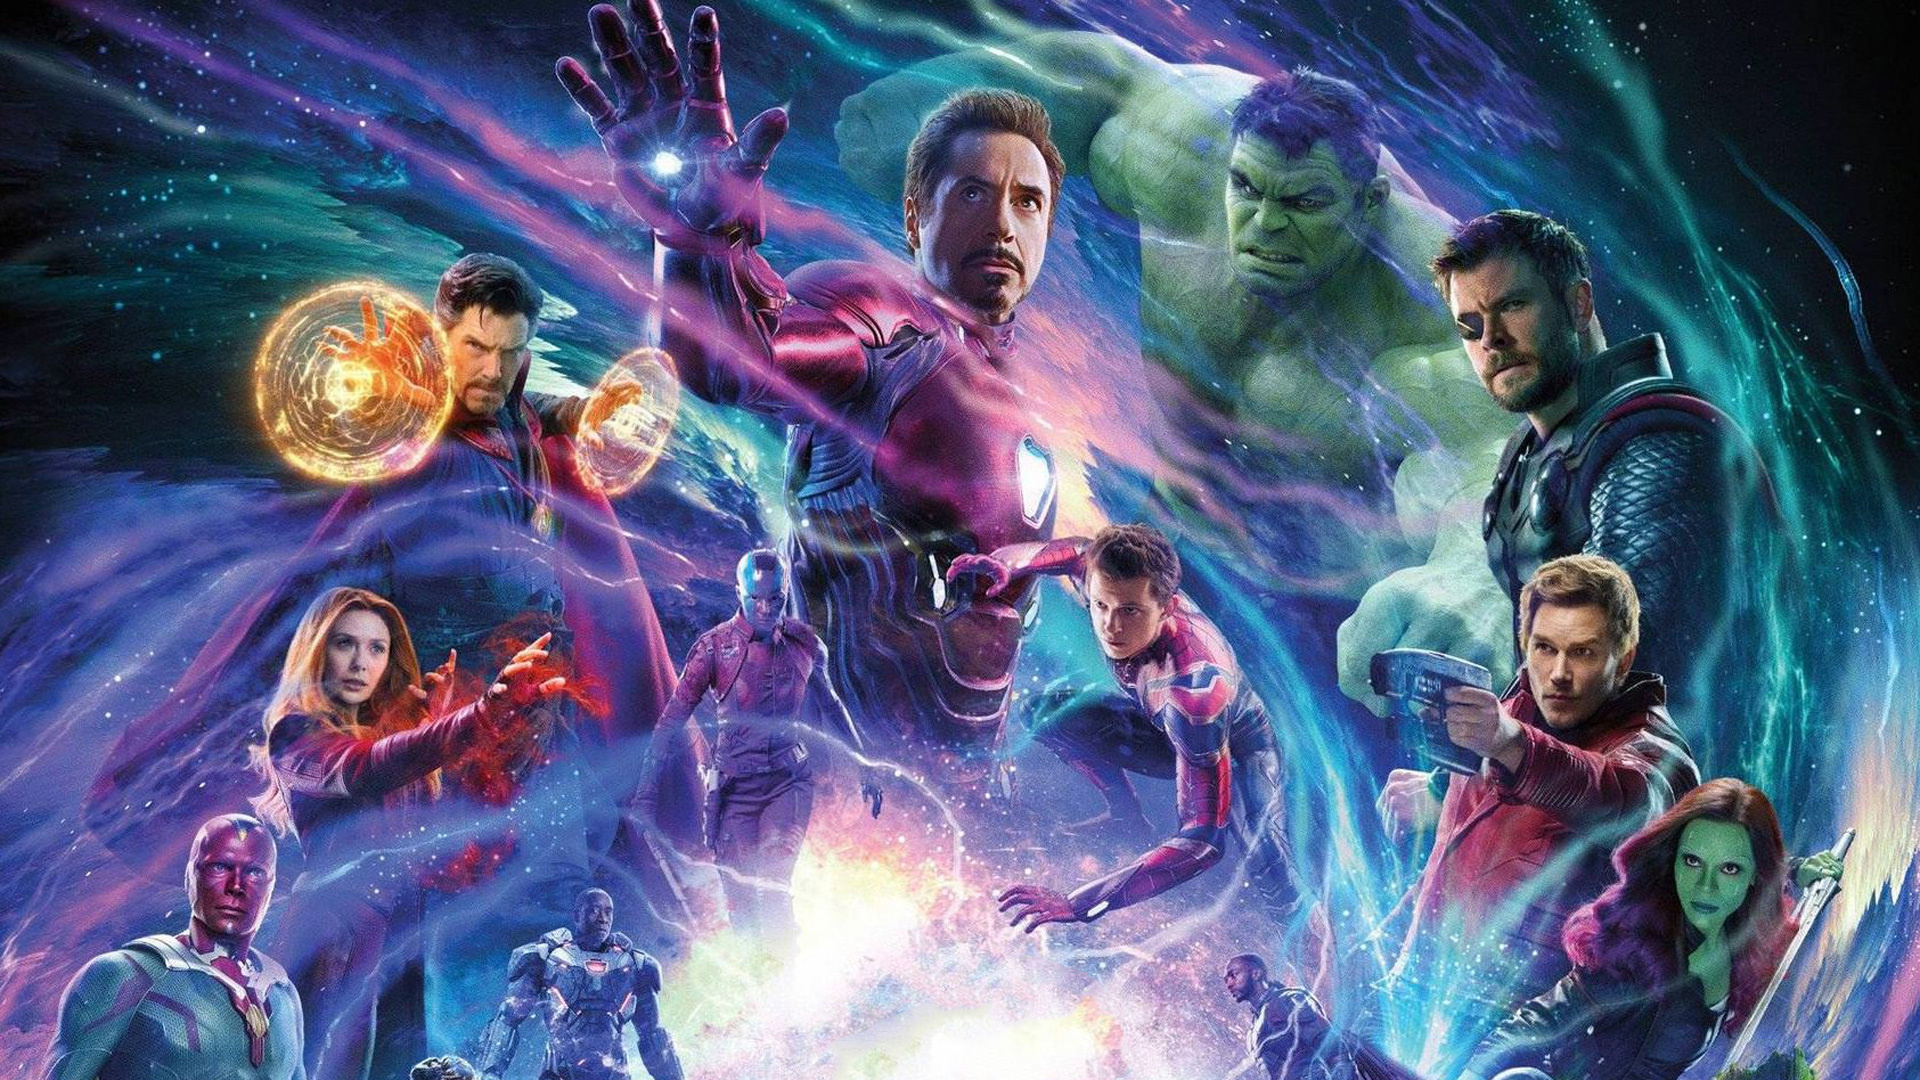 Download 19x10 Wallpaper Avengers Infinity War Movie Superhero Artwork Poster Widescreen 16 10 Widescreen 19x10 Hd Image Background 6504